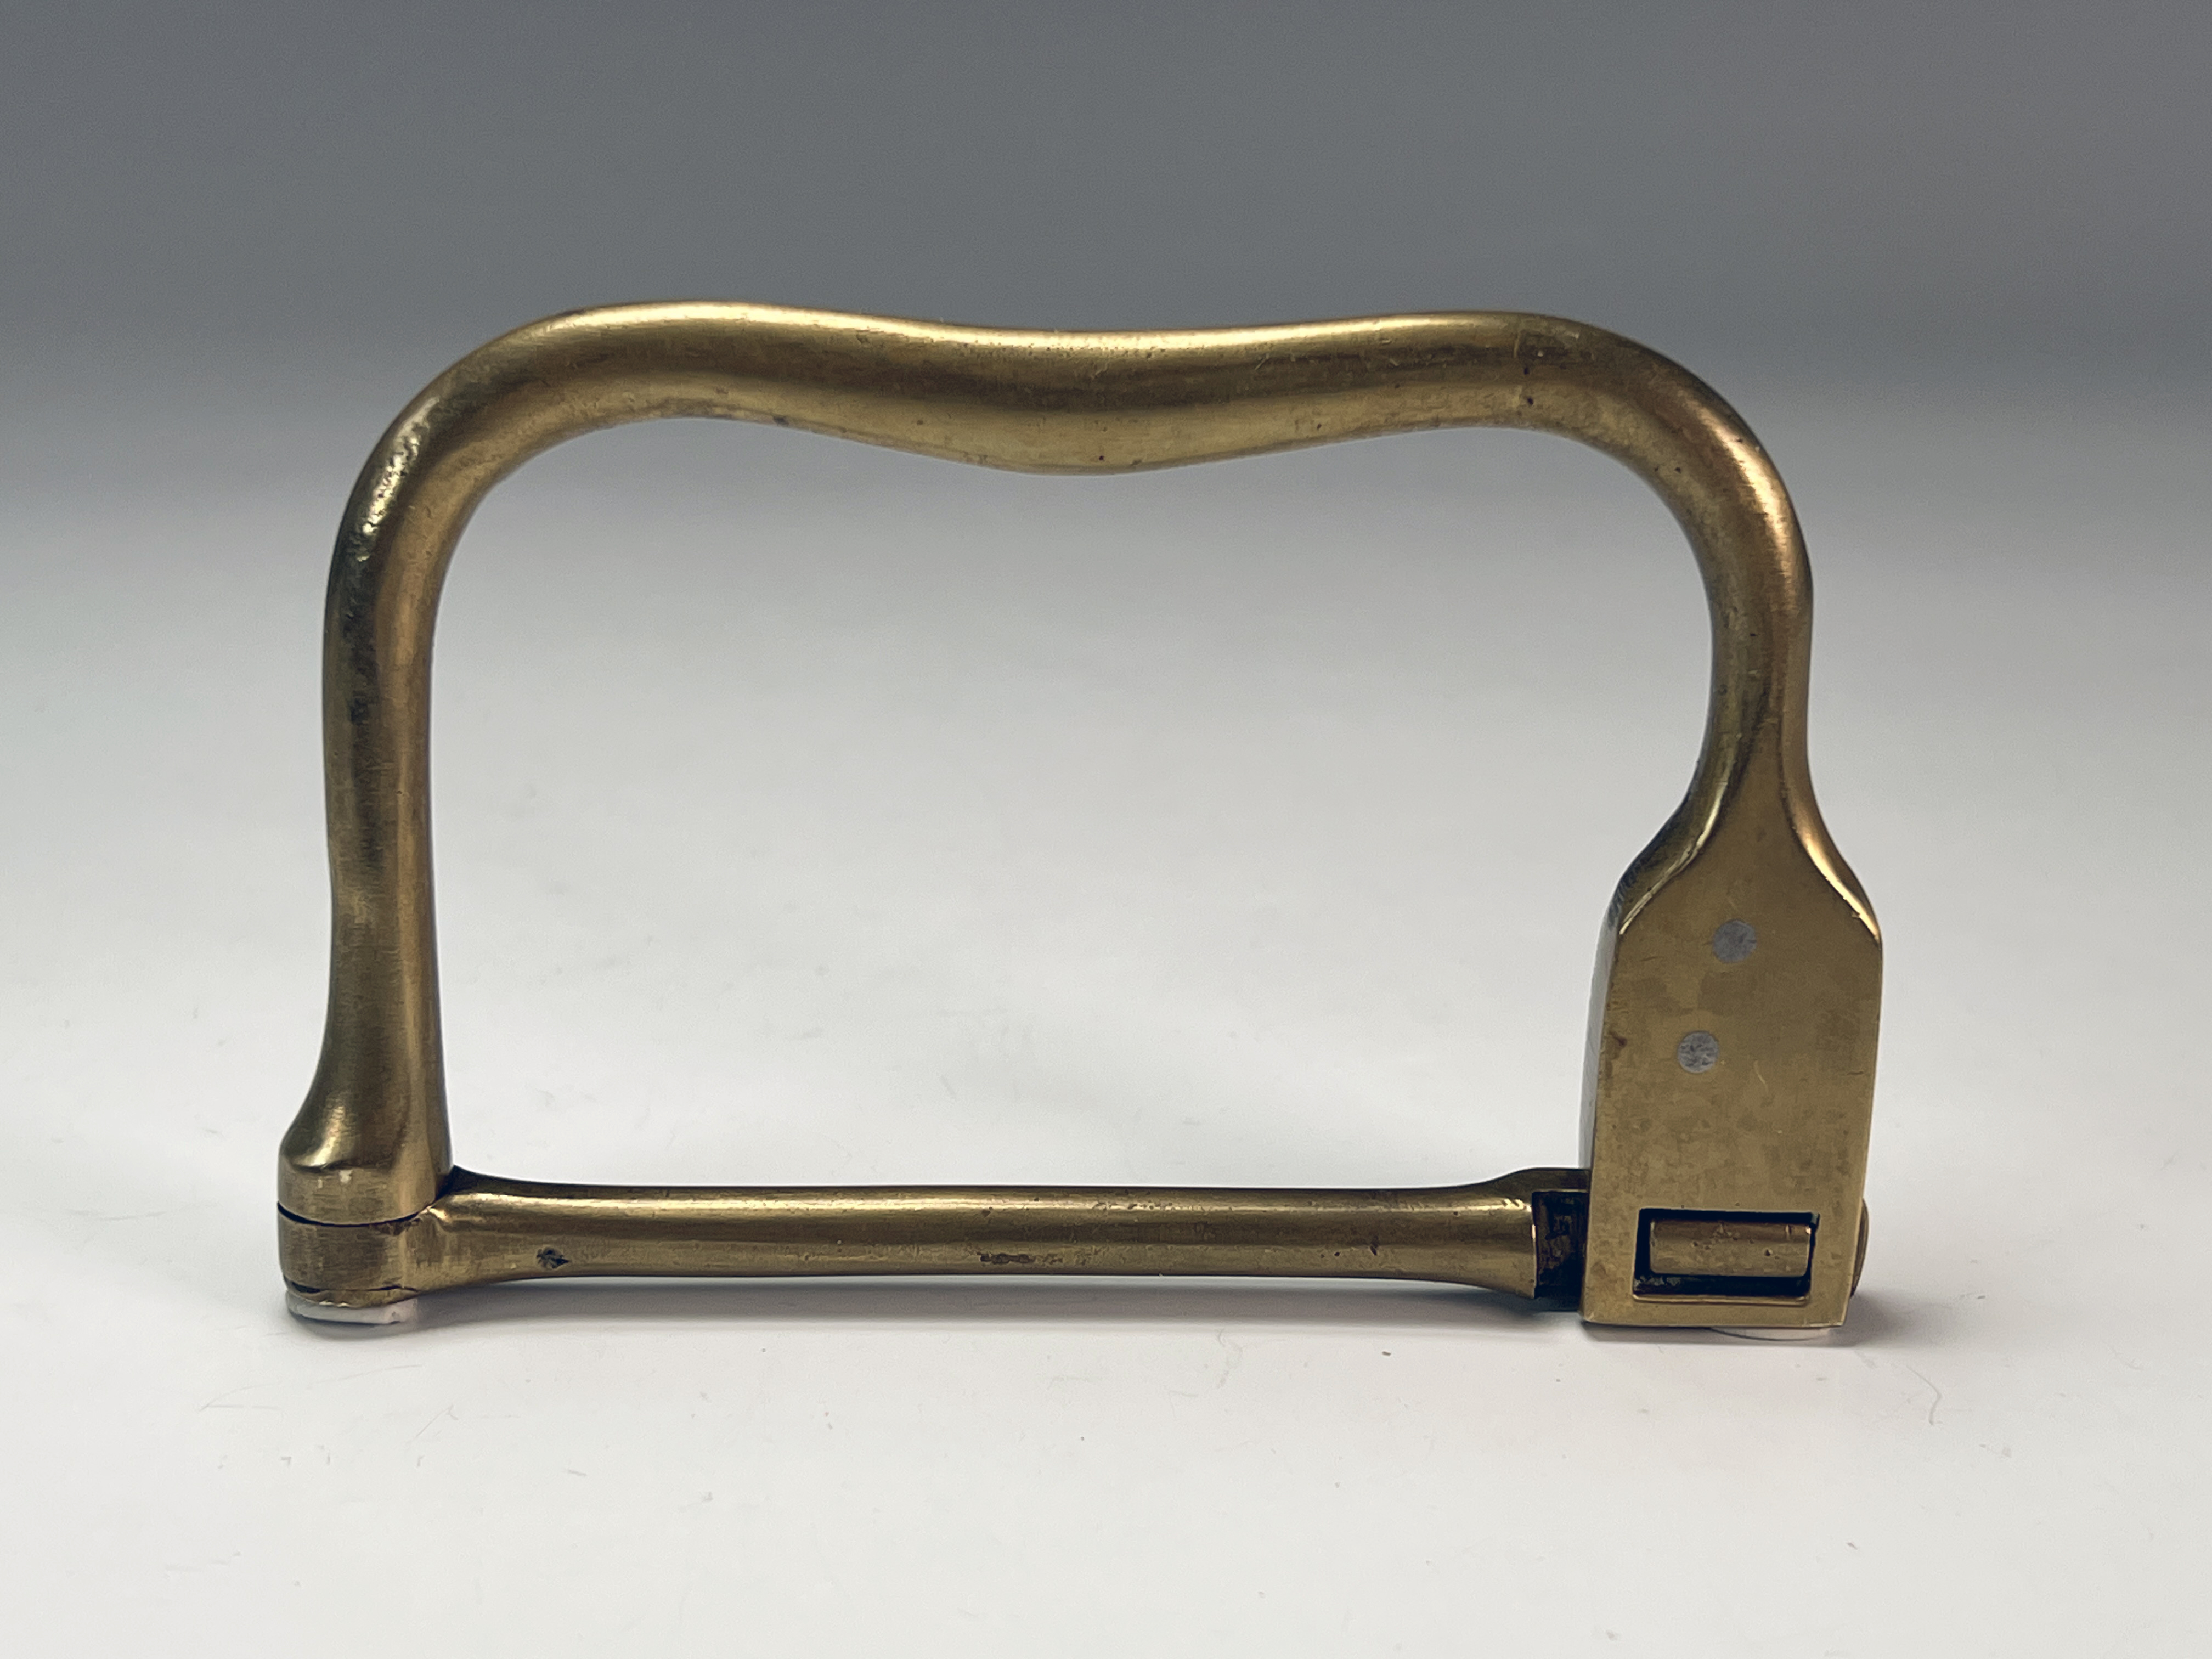 Vintage Brass Shackle Lock Sea Bag Hasp With Key image 2